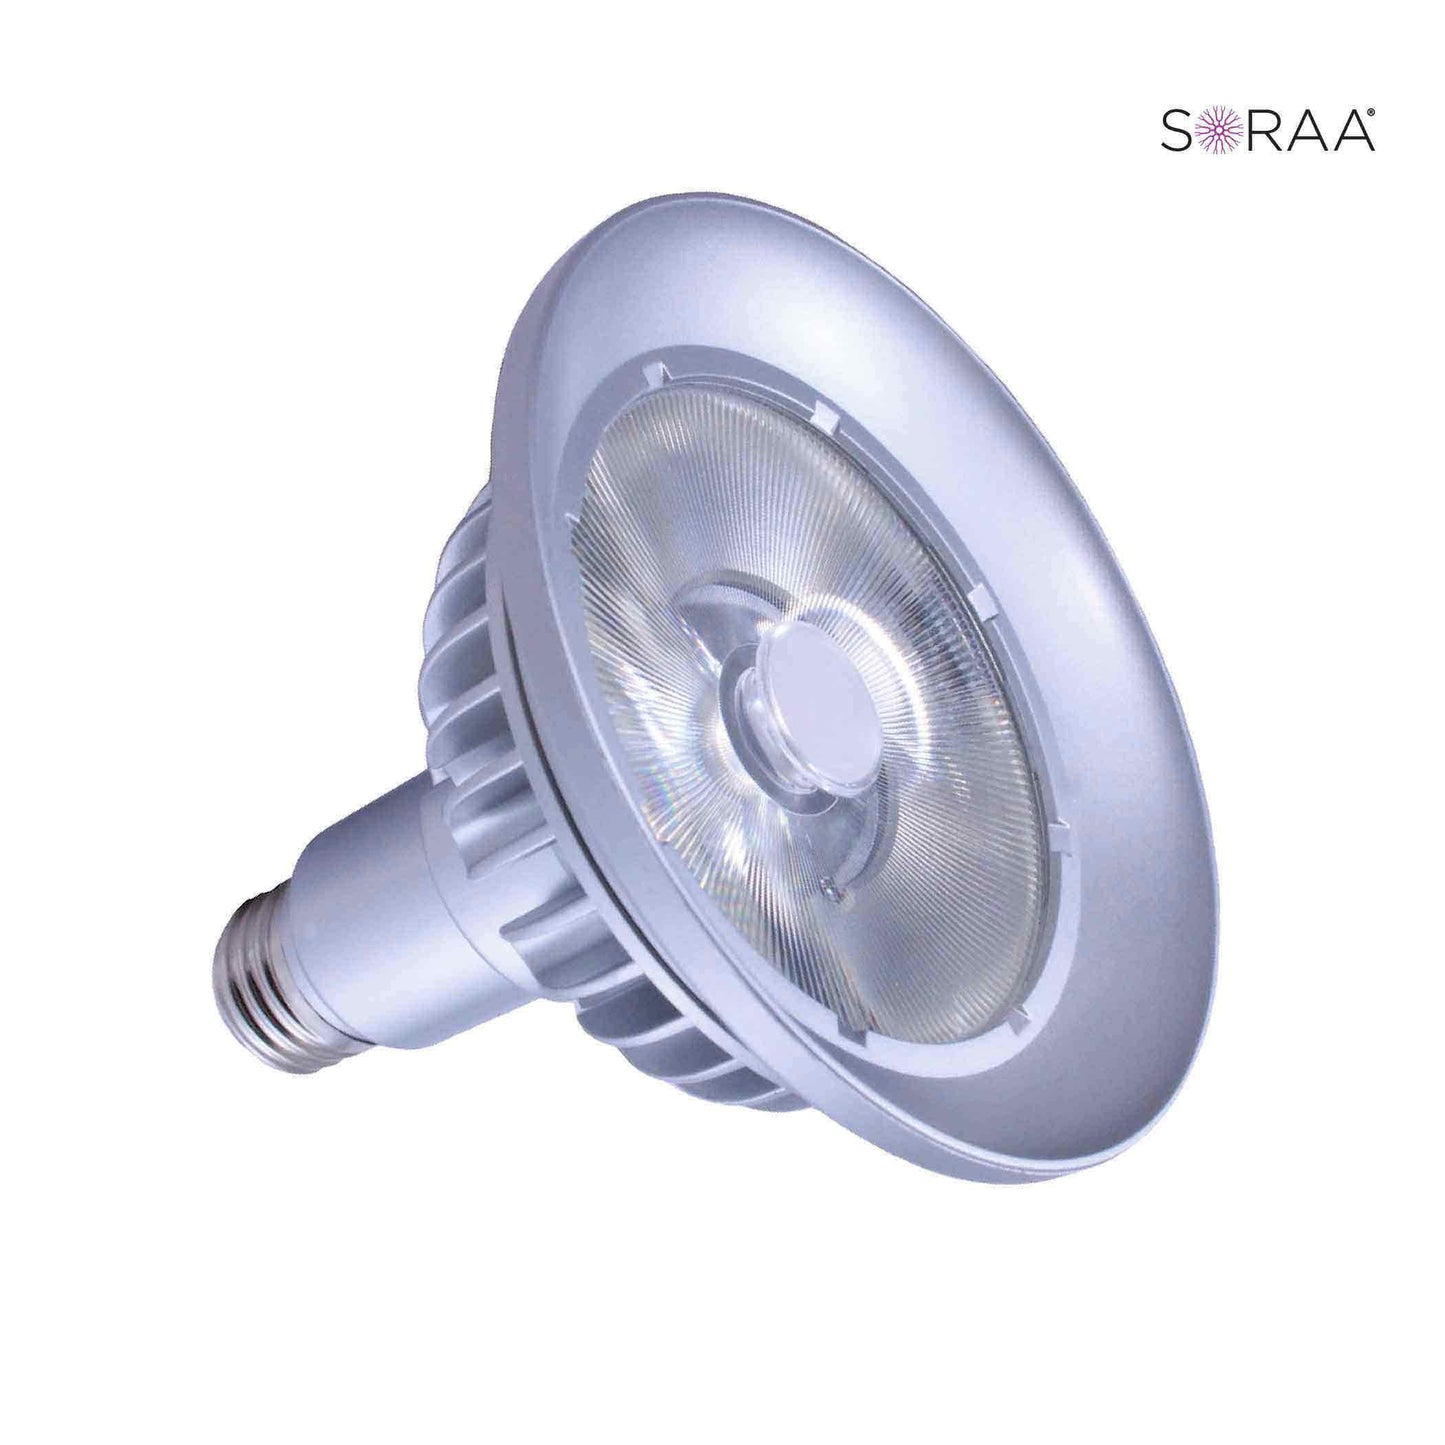 SORAA LED PAR38 MEDIUM SCREW (E26) 18.5W DIMMABLE LIGHT BULB 2700K/WARM WHITE 120W HALOGEN EQUIVALENT 1PK (777781)